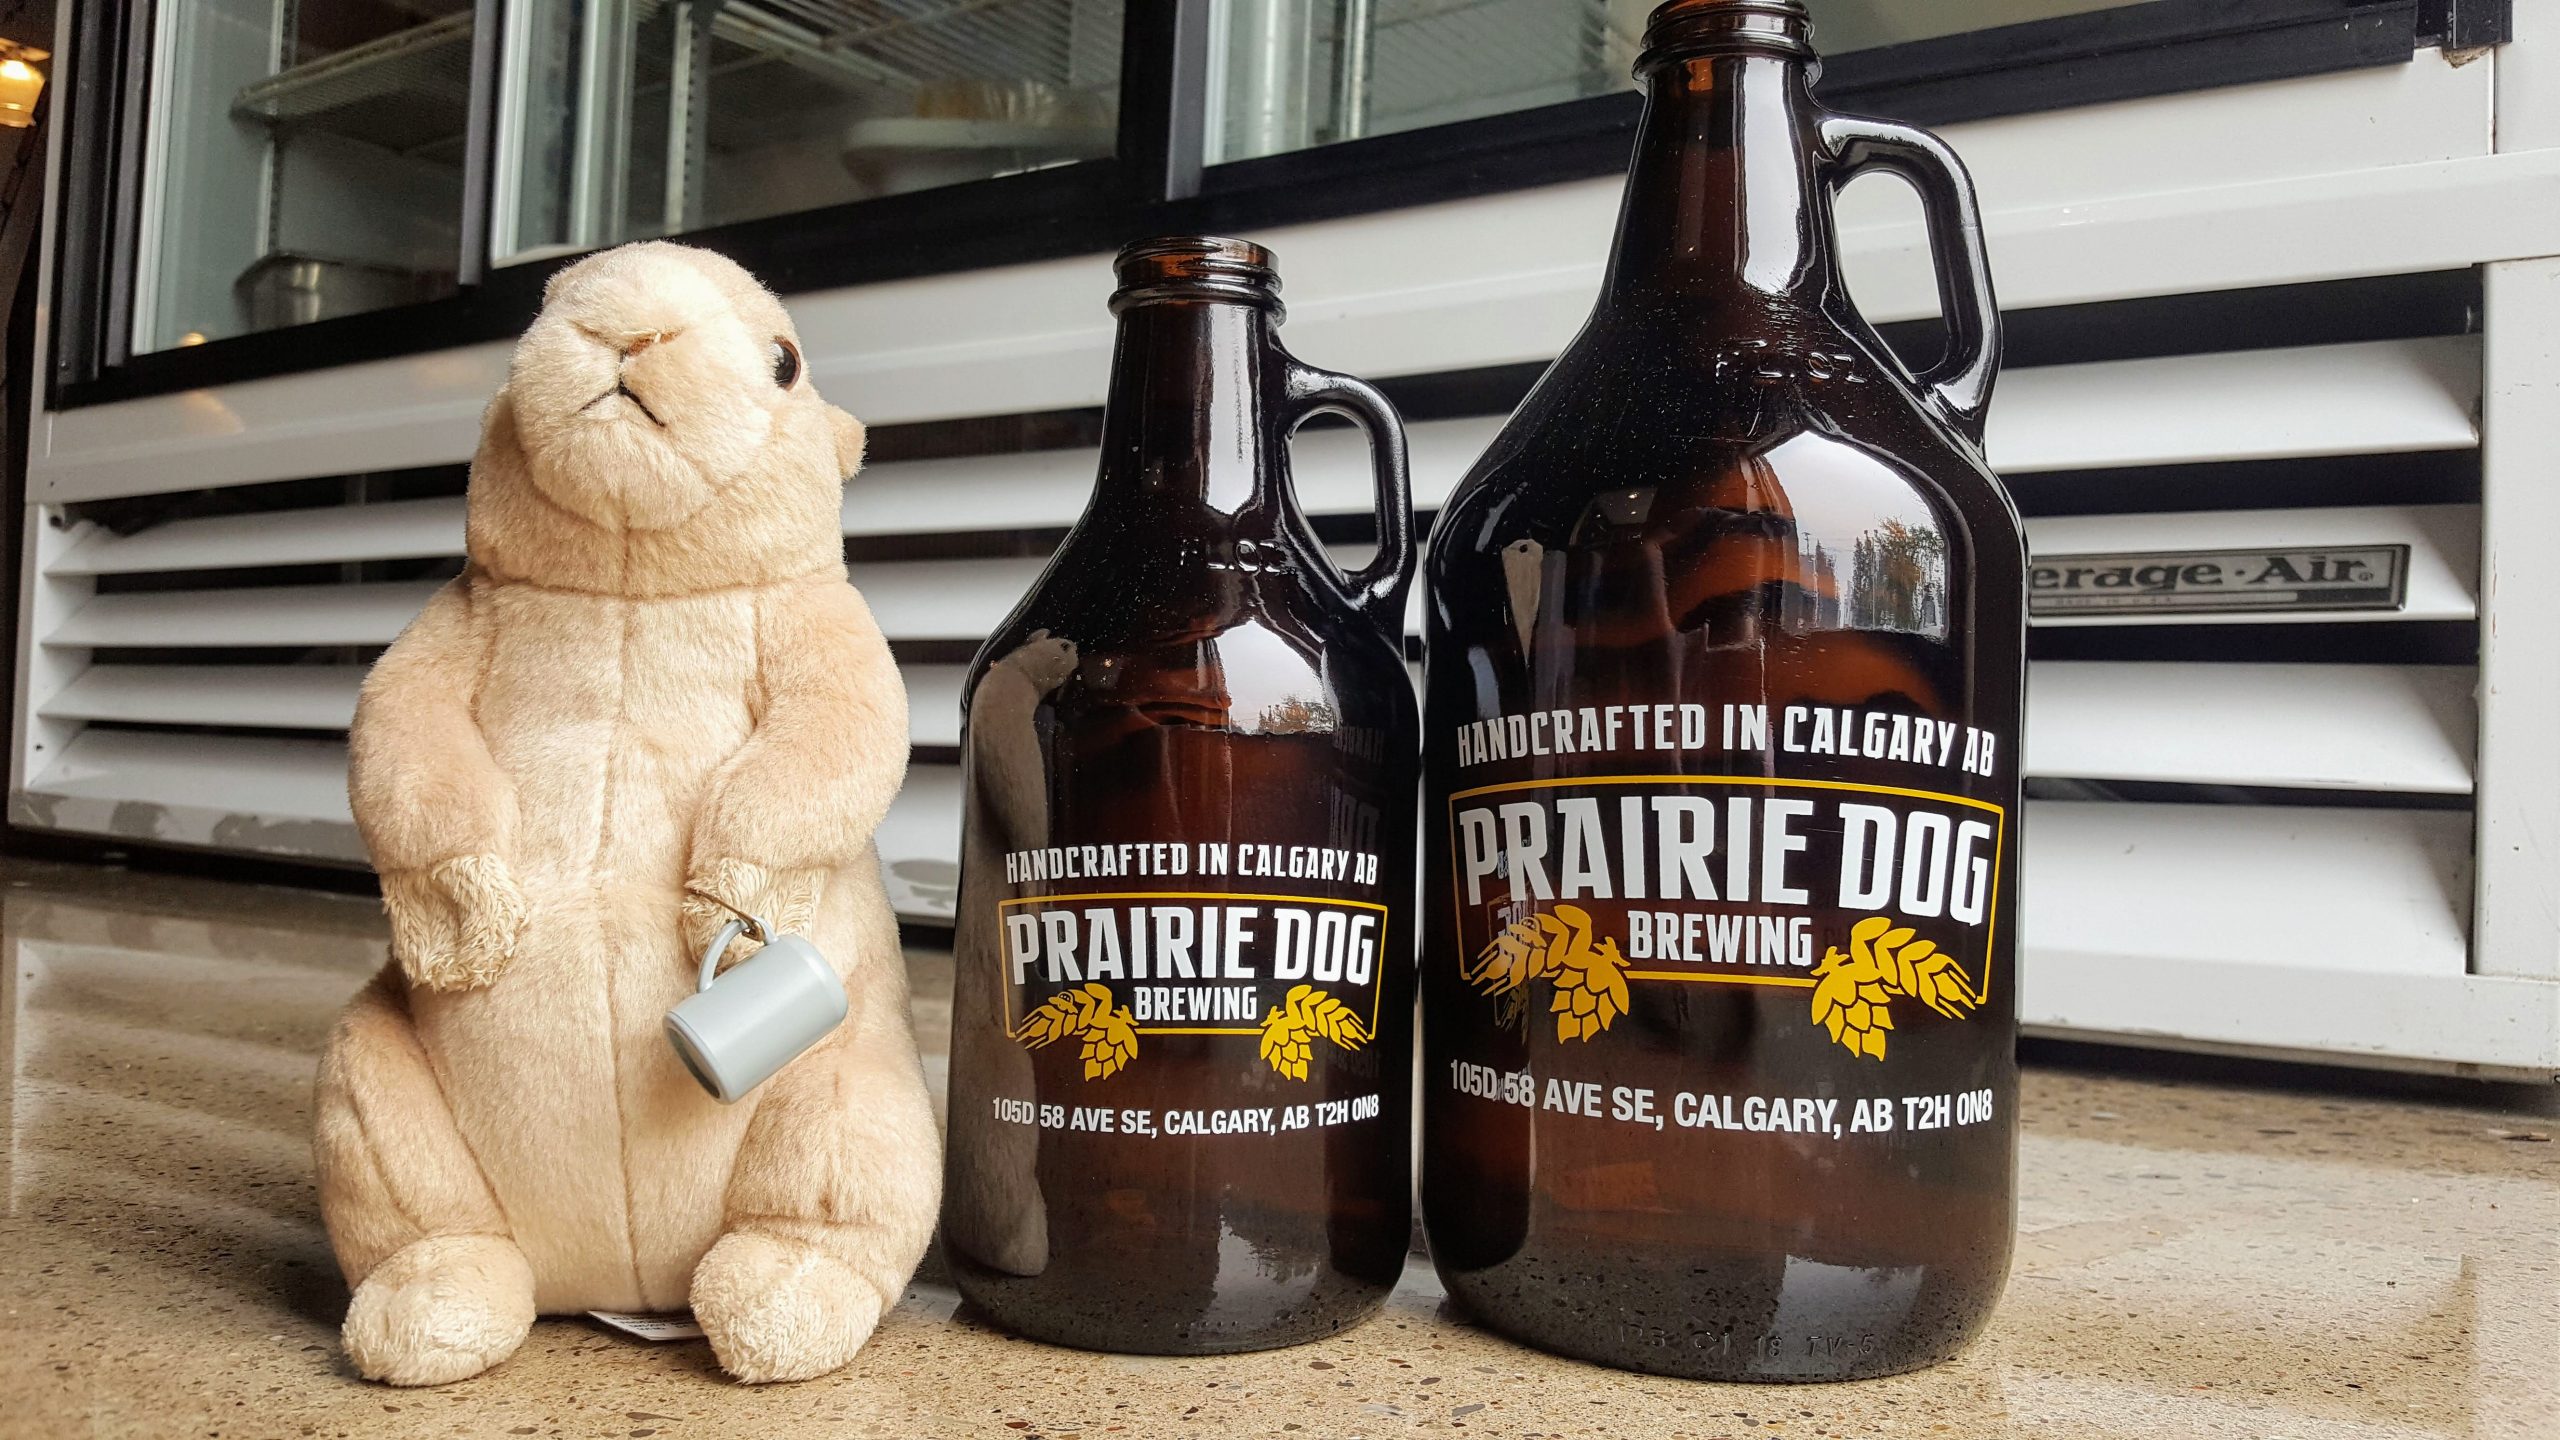 Prairie Dog howler jug and growler jug next to a prairie dog stuffed animal holding a beer stein.